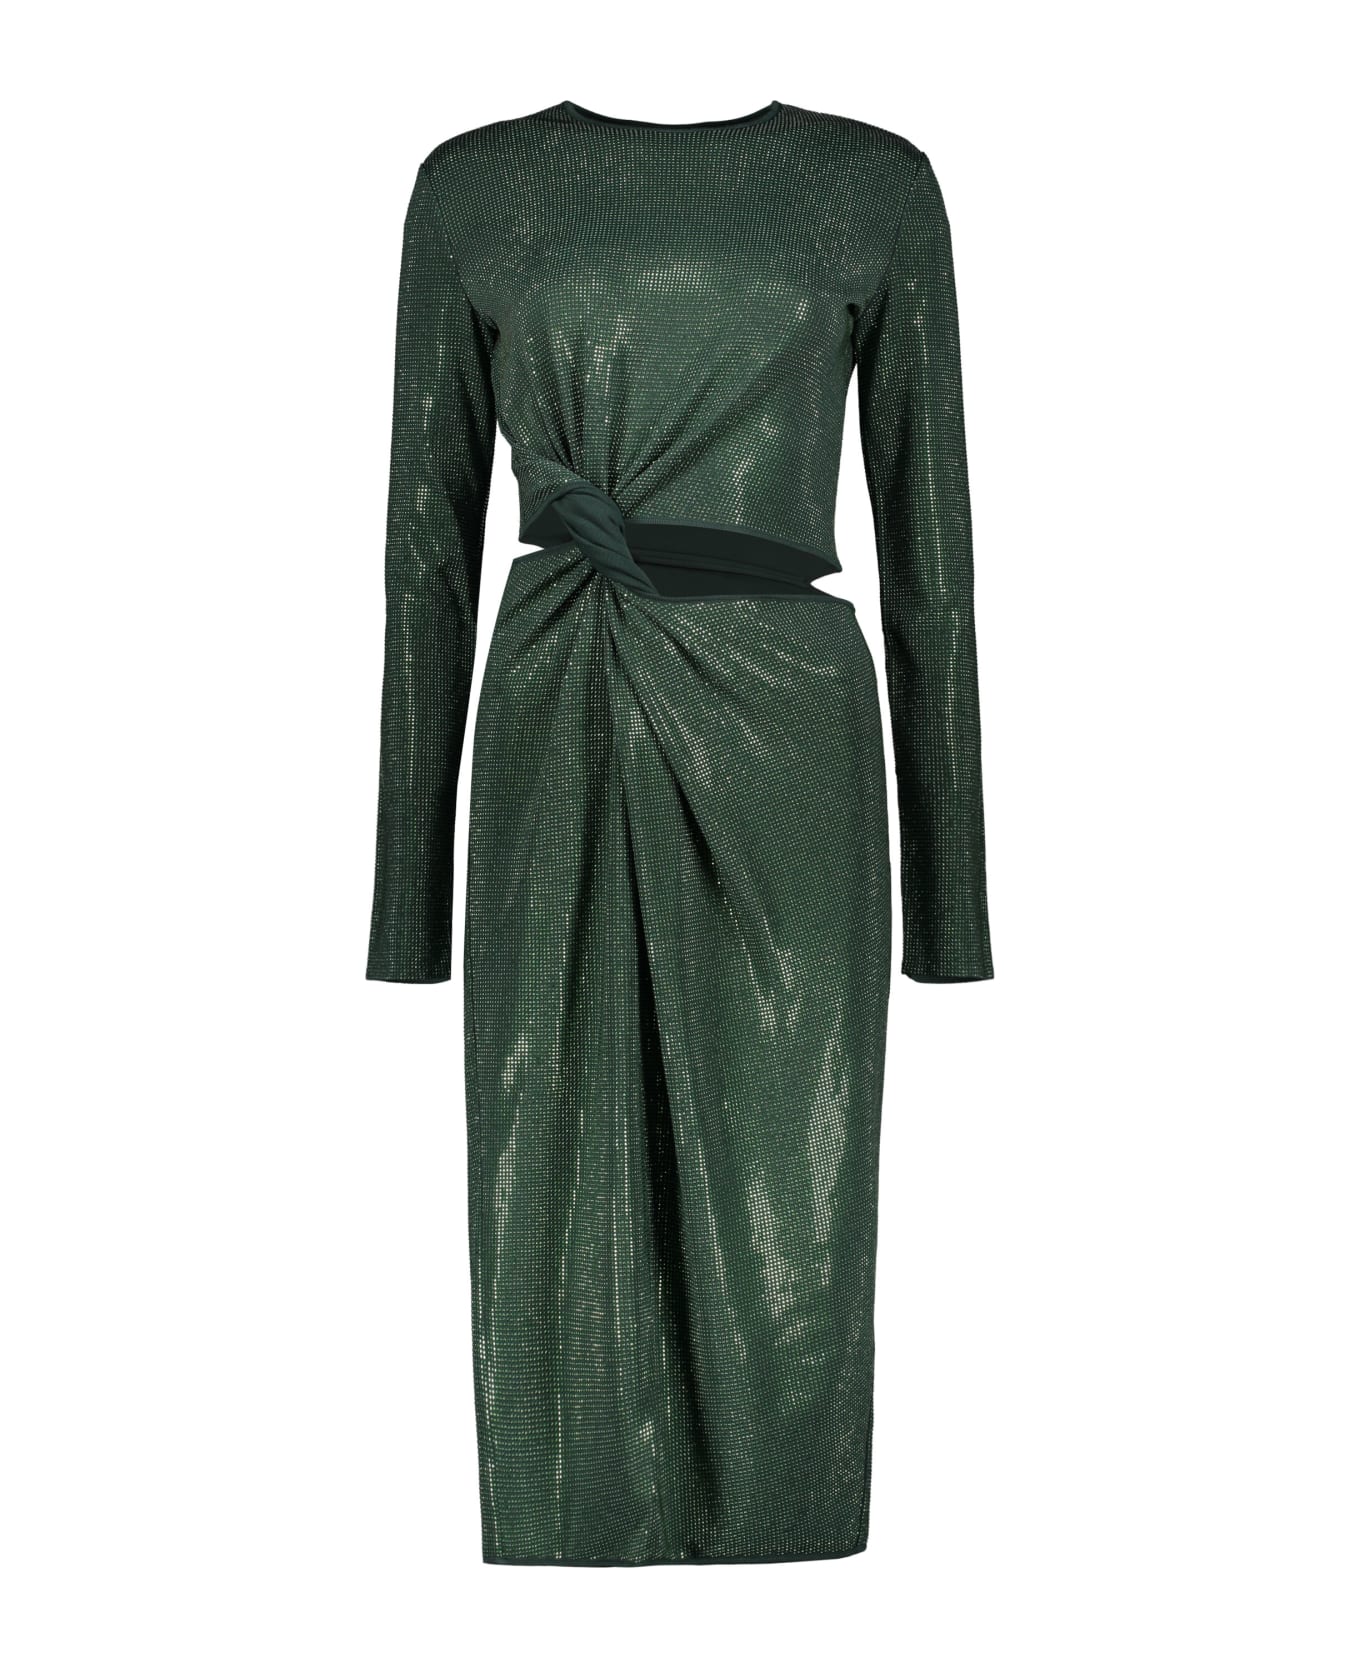 Bottega Veneta Rhinestone Dress - green